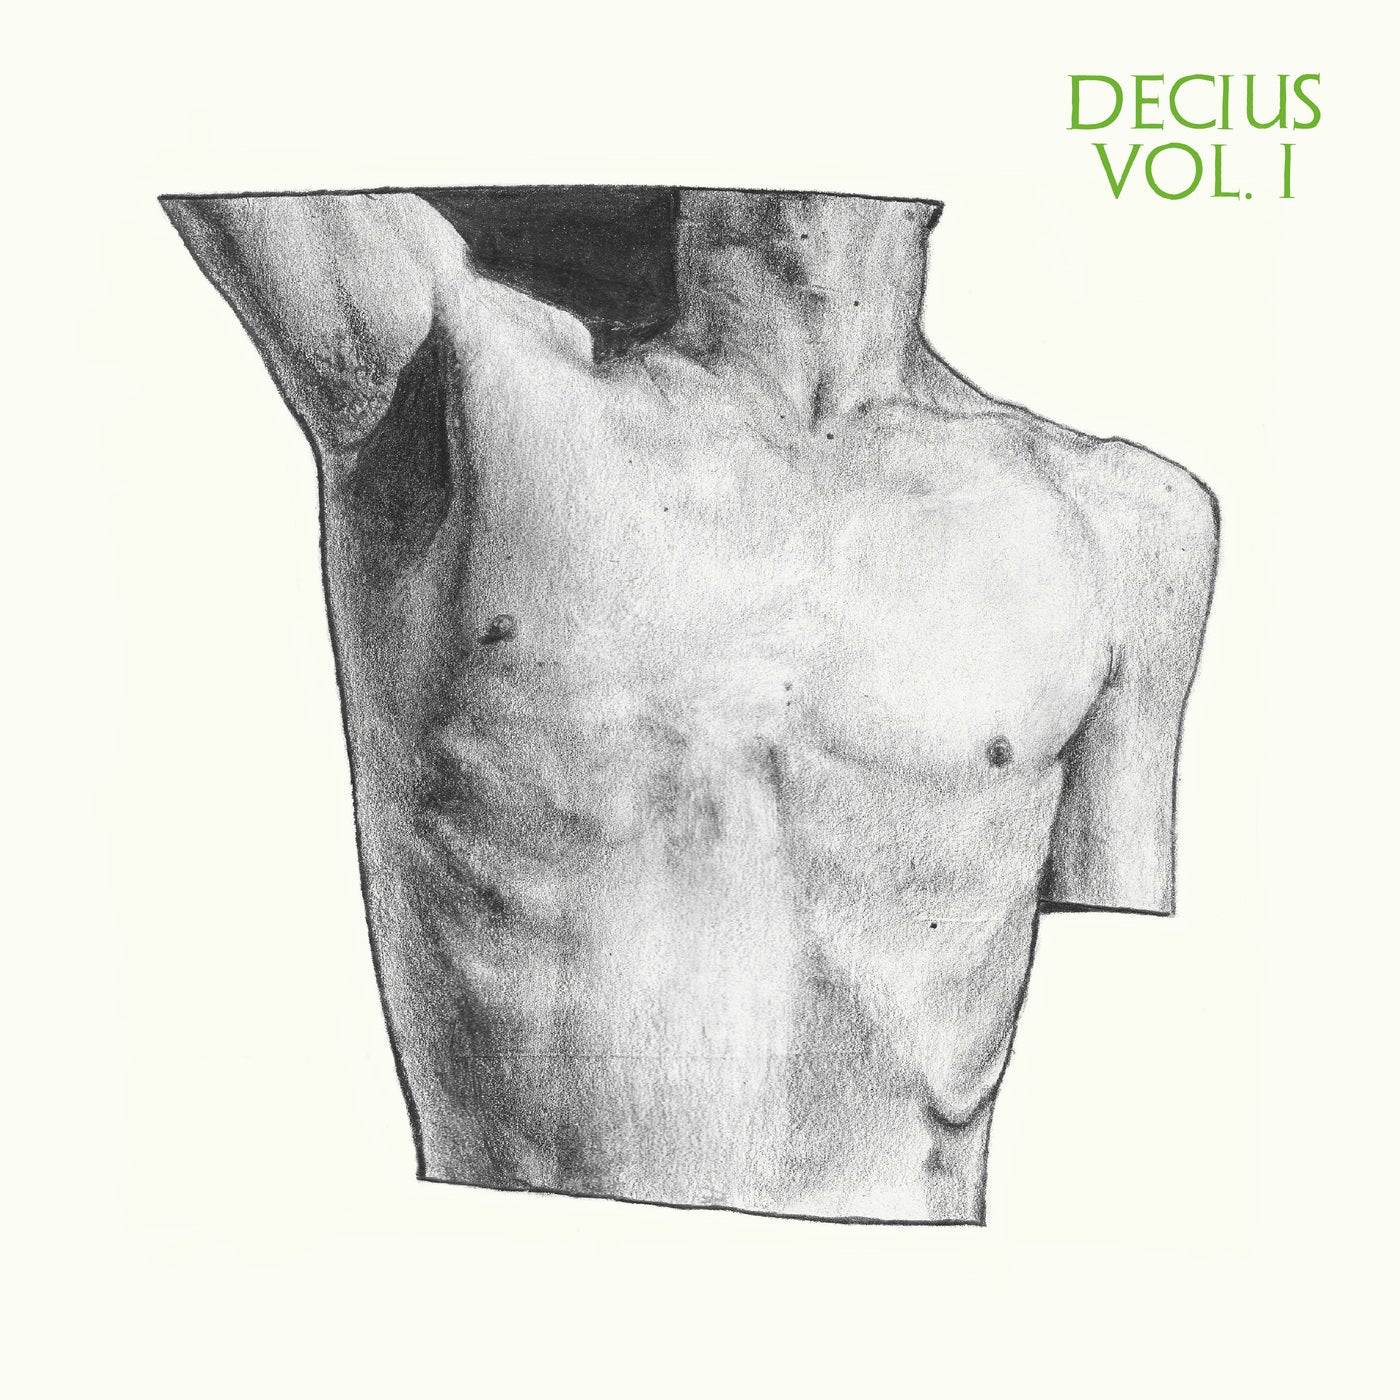 Decius Vol. I